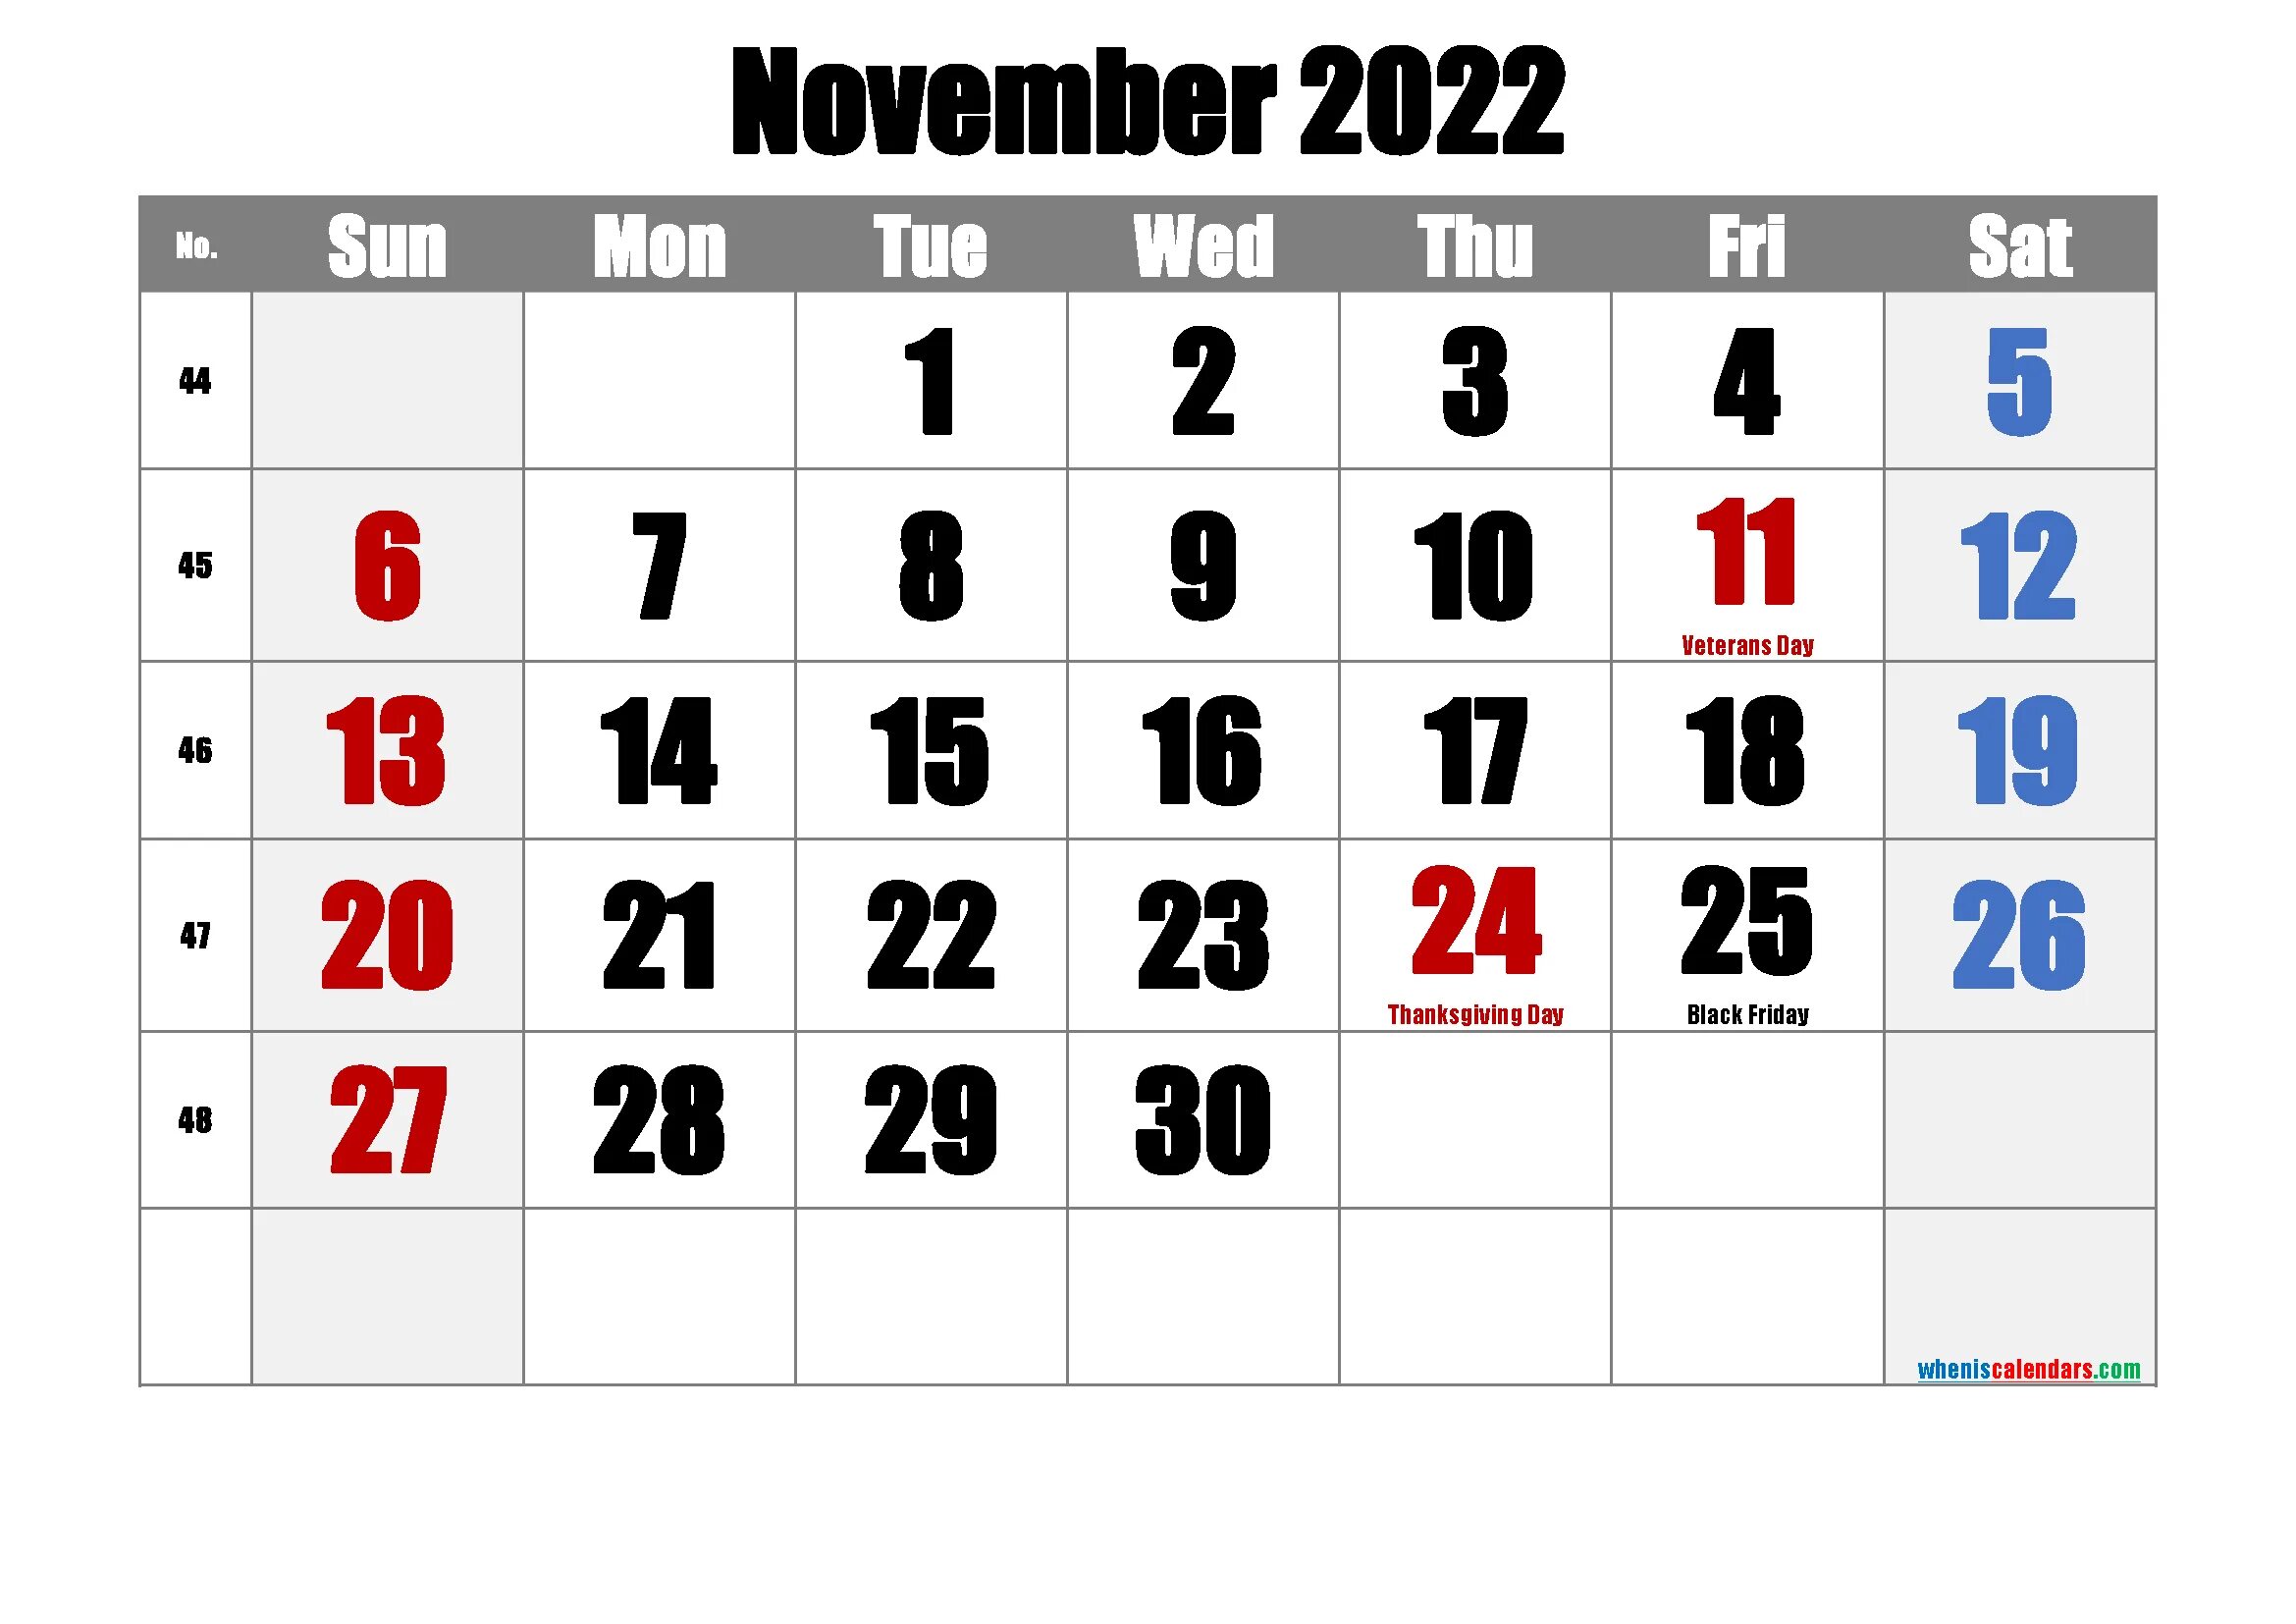 Календарь на октябрь 2022 года. Календарь ноябрь 2022. Календарь на ноябрь 2022 года. Календарь на ноябрь 2022г. Нояб 2022